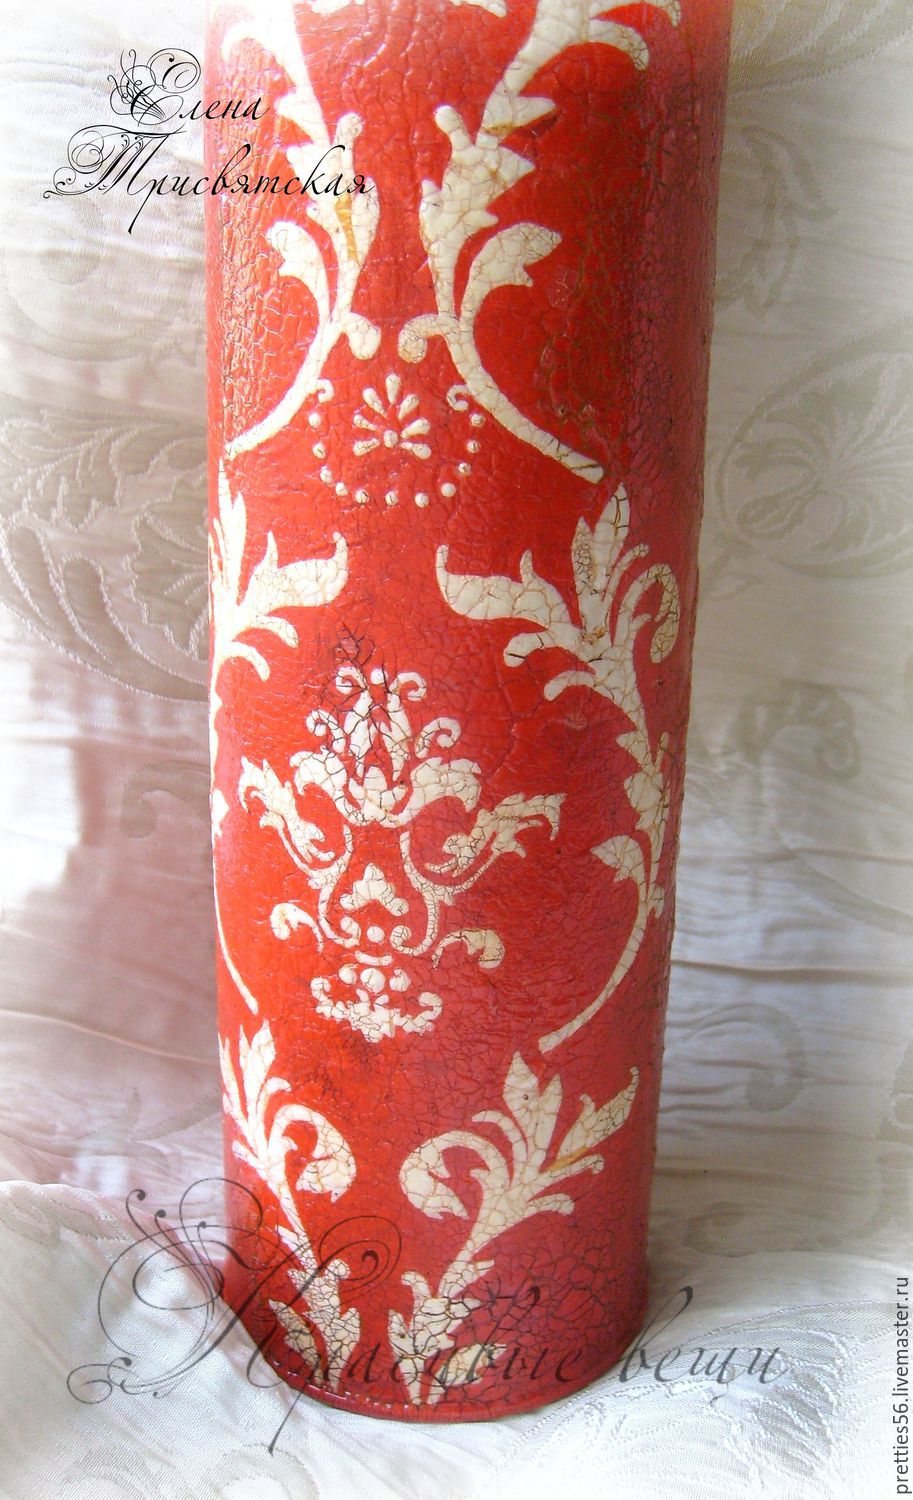 Ваза декоративная для сухоцветов "Красная классика". Декупаж, винтаж